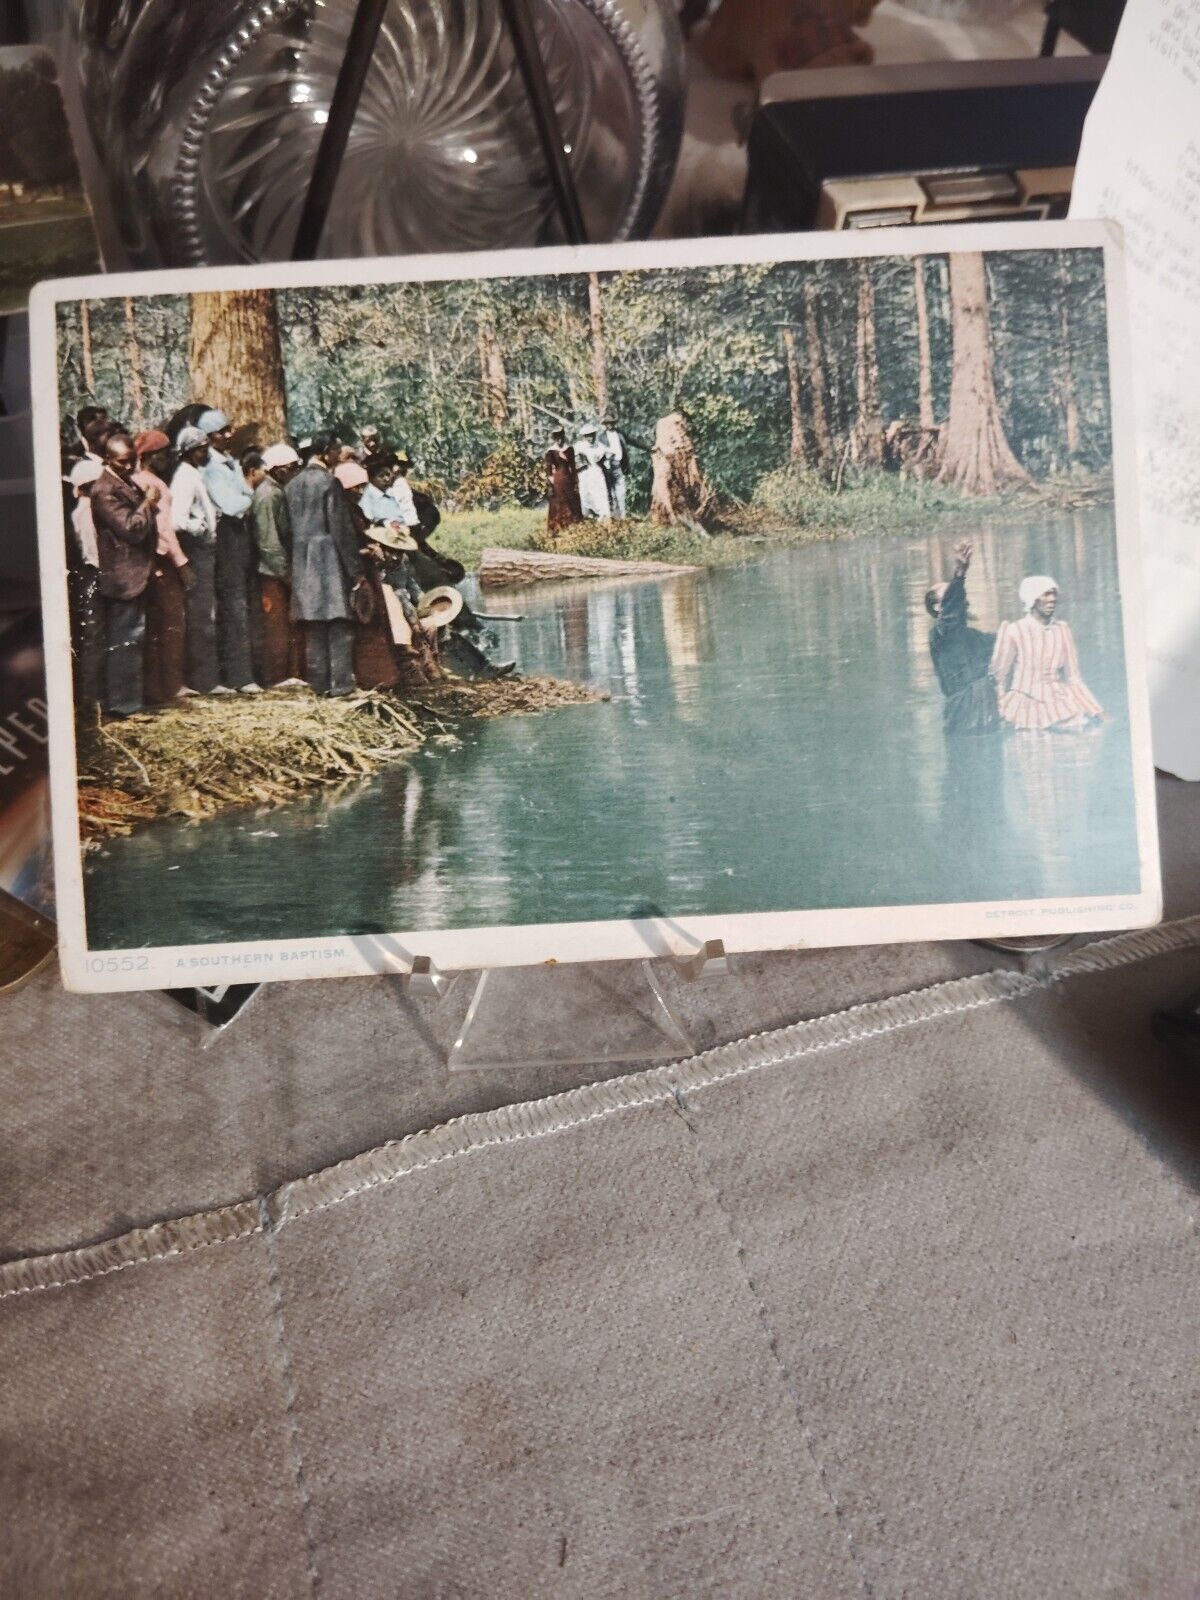 Vtg Postcard A Southern Baptism Card Number 10552 Detroit Publishing Company